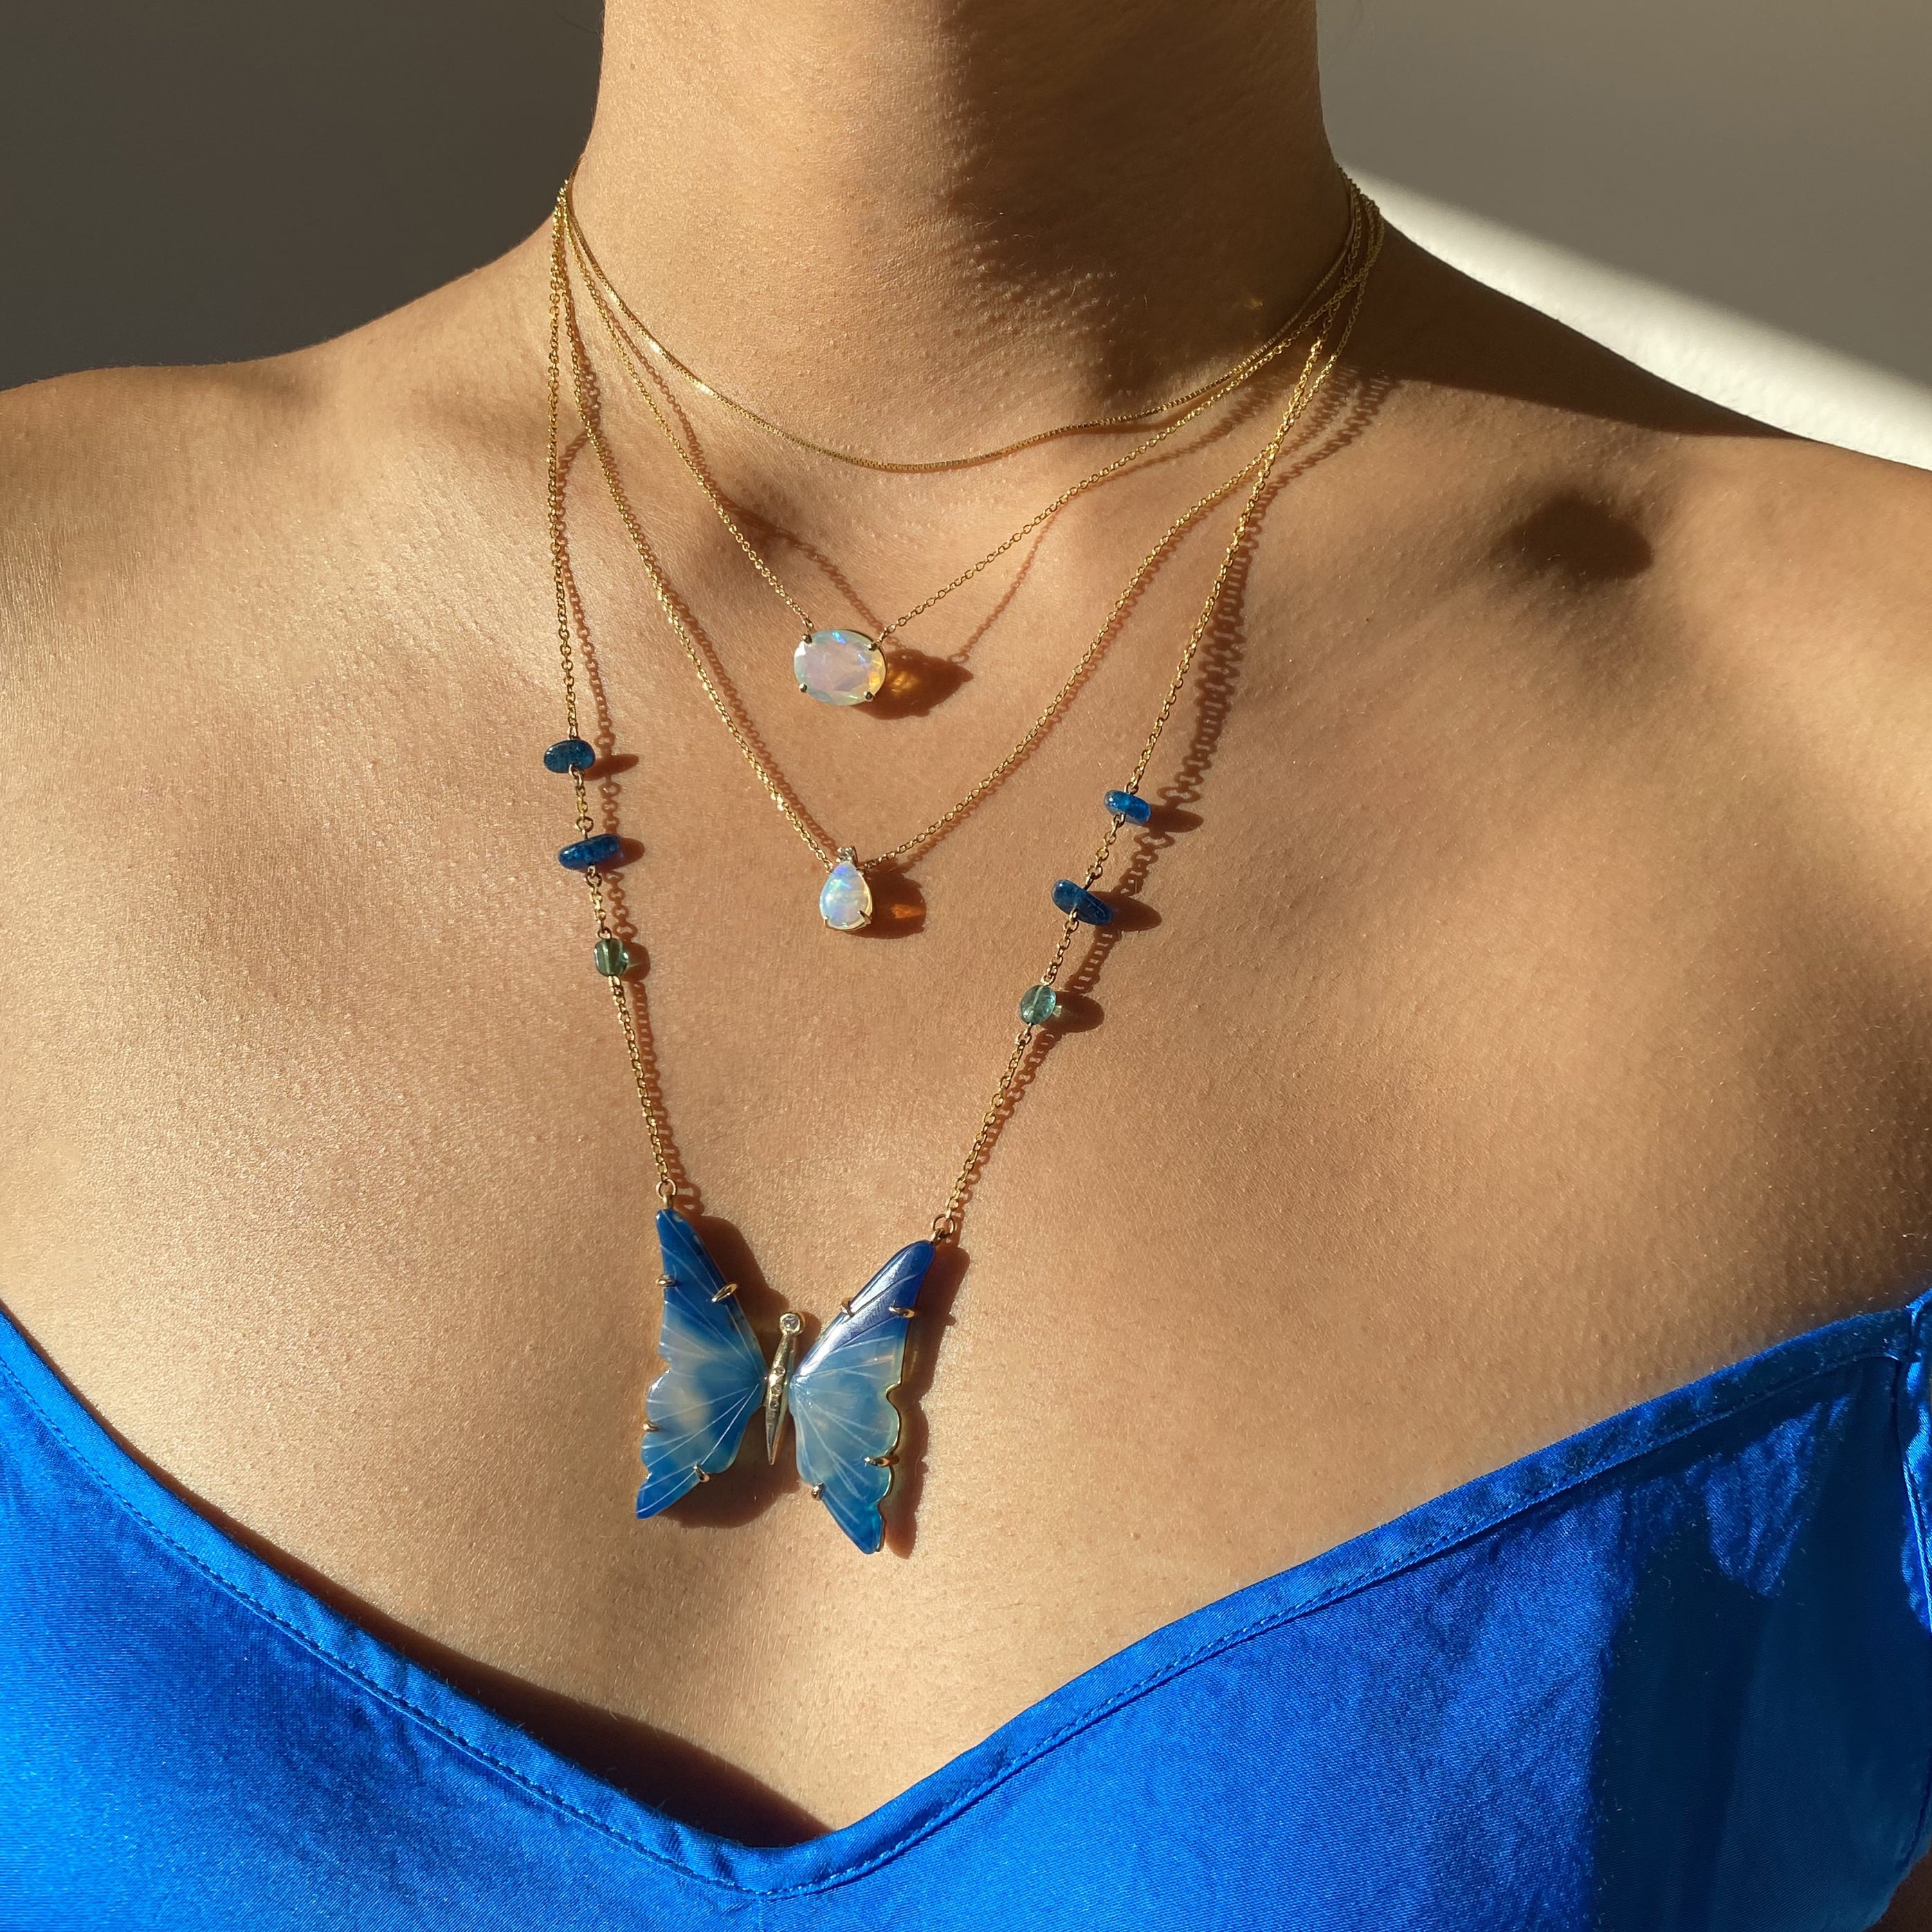 Handmade Gold & Sapphire Blue Butterfly Necklace